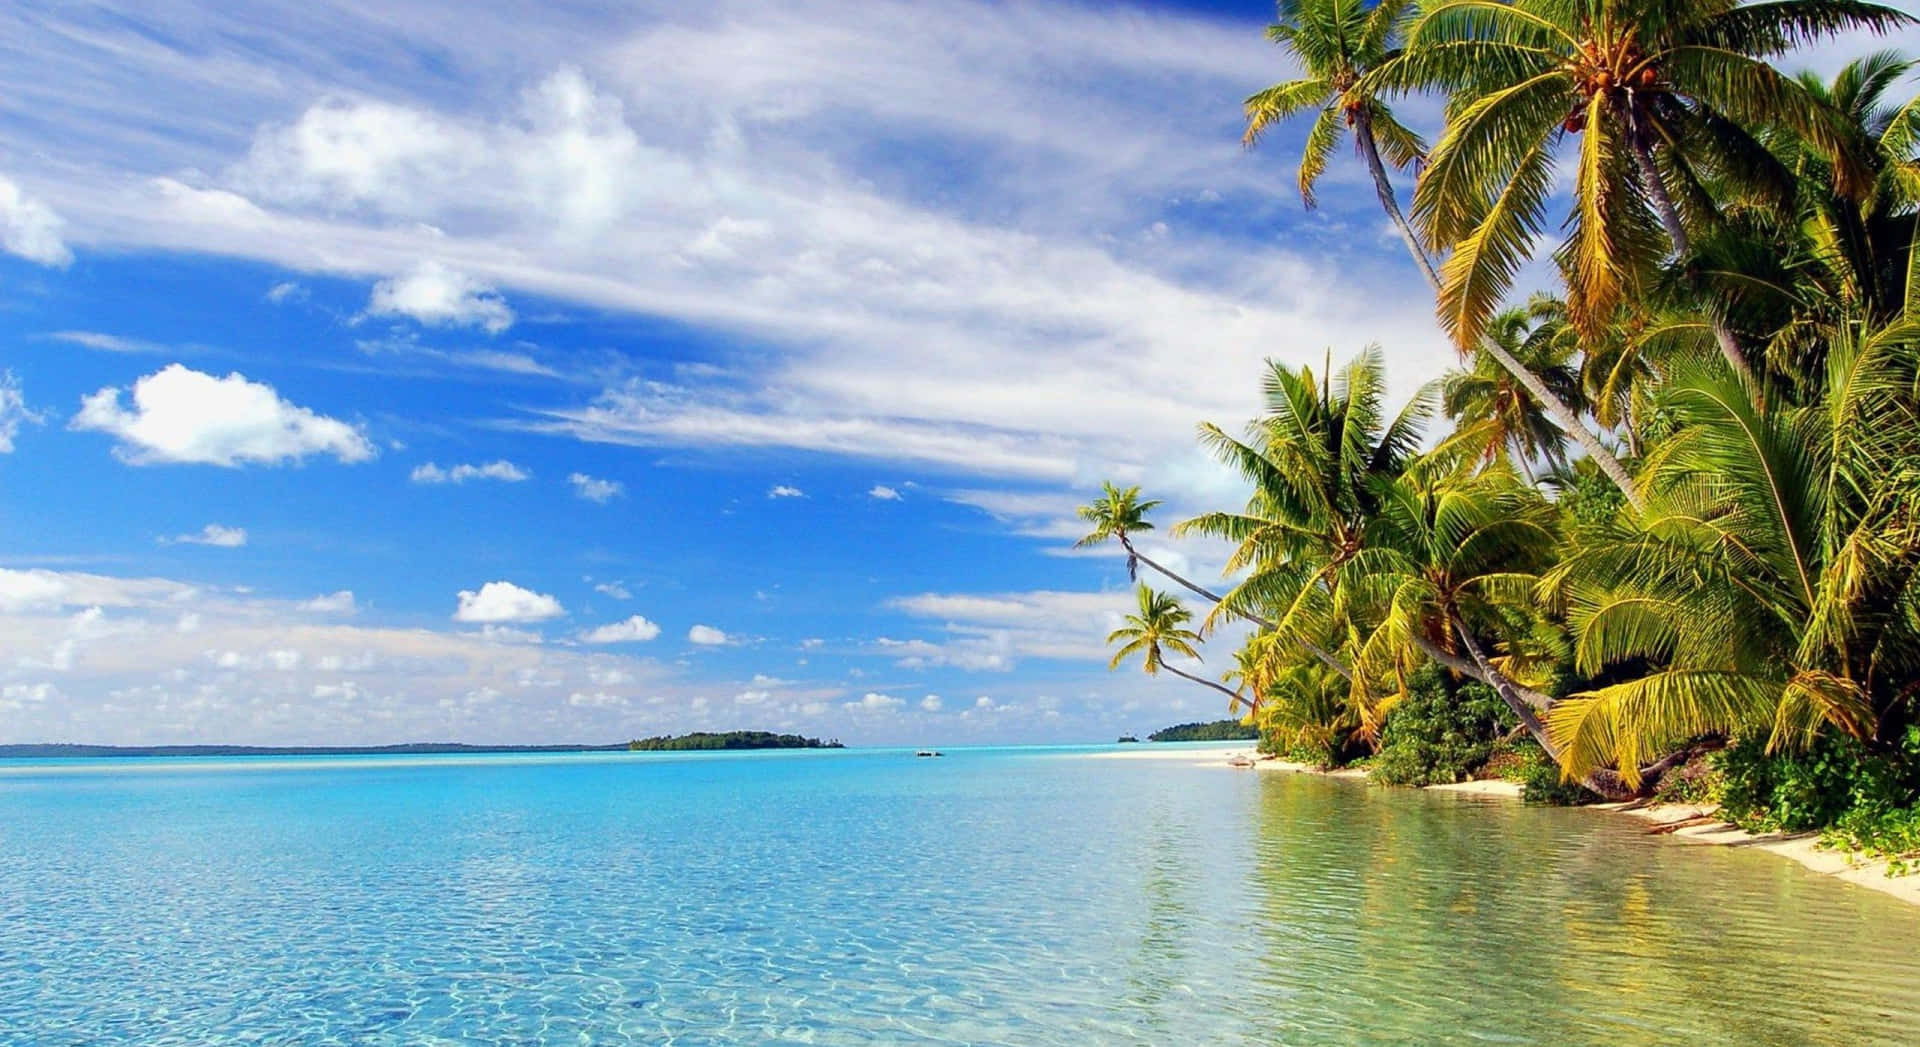 Take a relaxing stroll along a tropical beach.